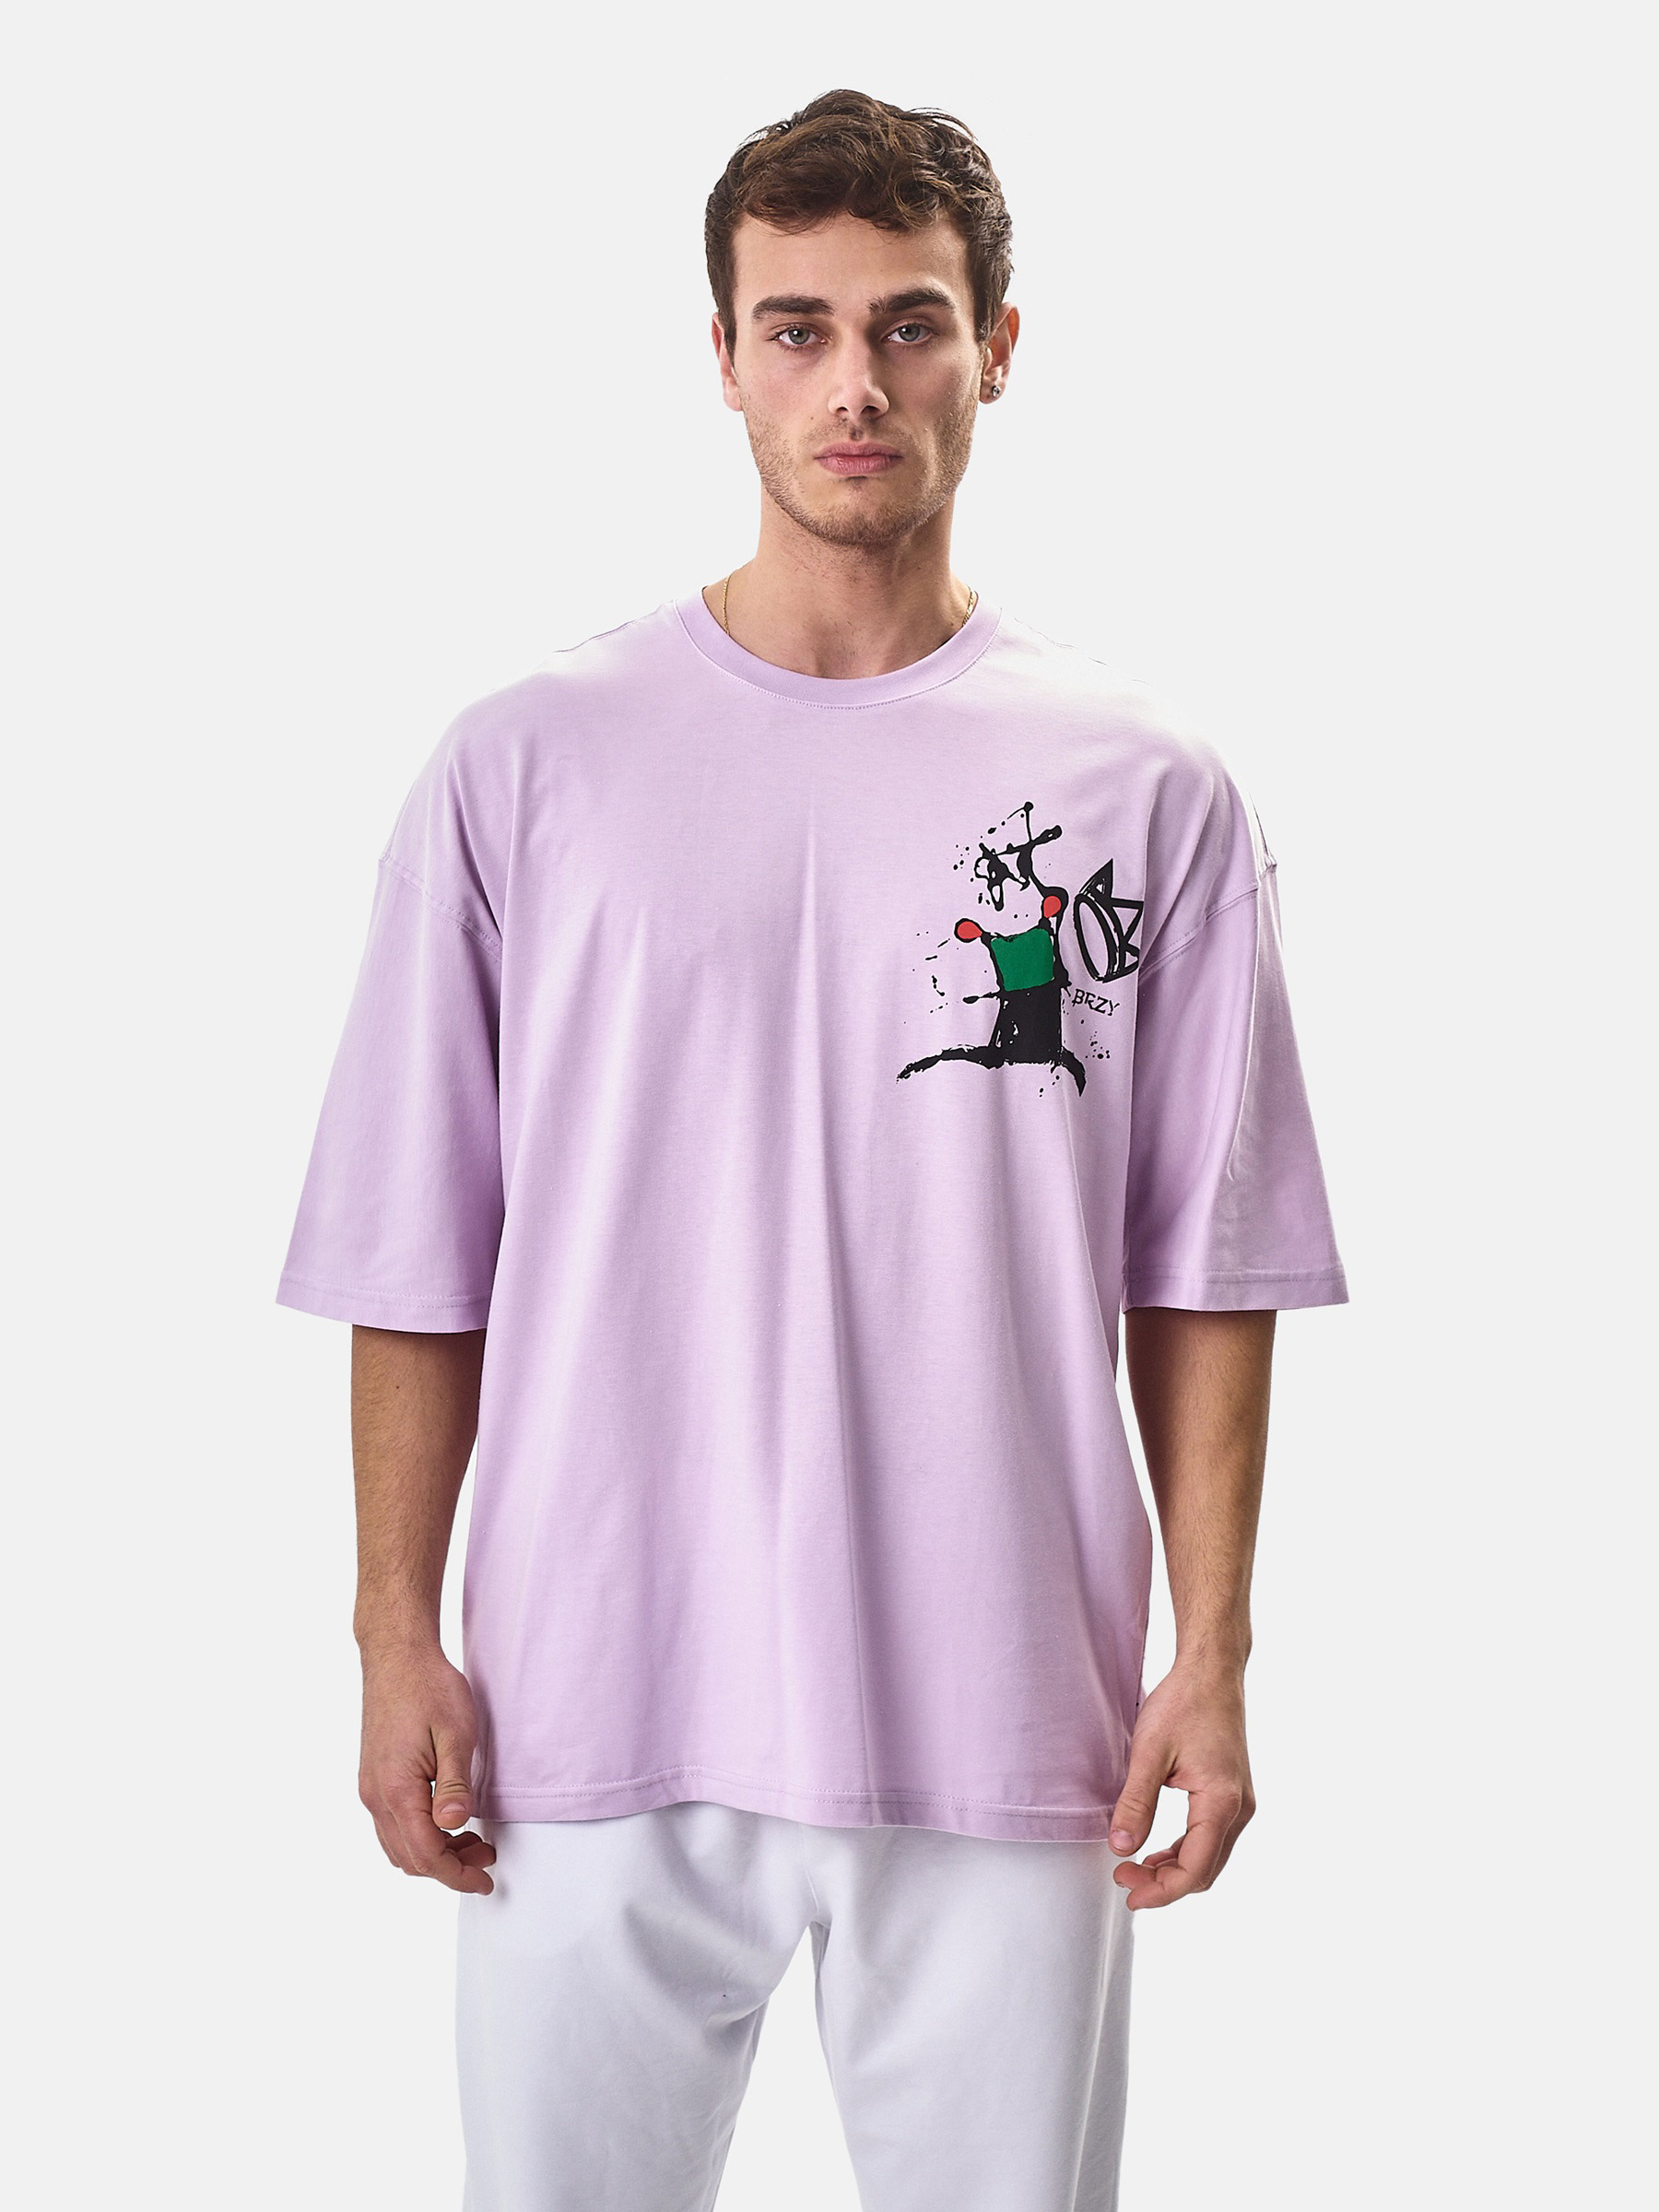 WAM Denim Brodie Purple T-Shirt-